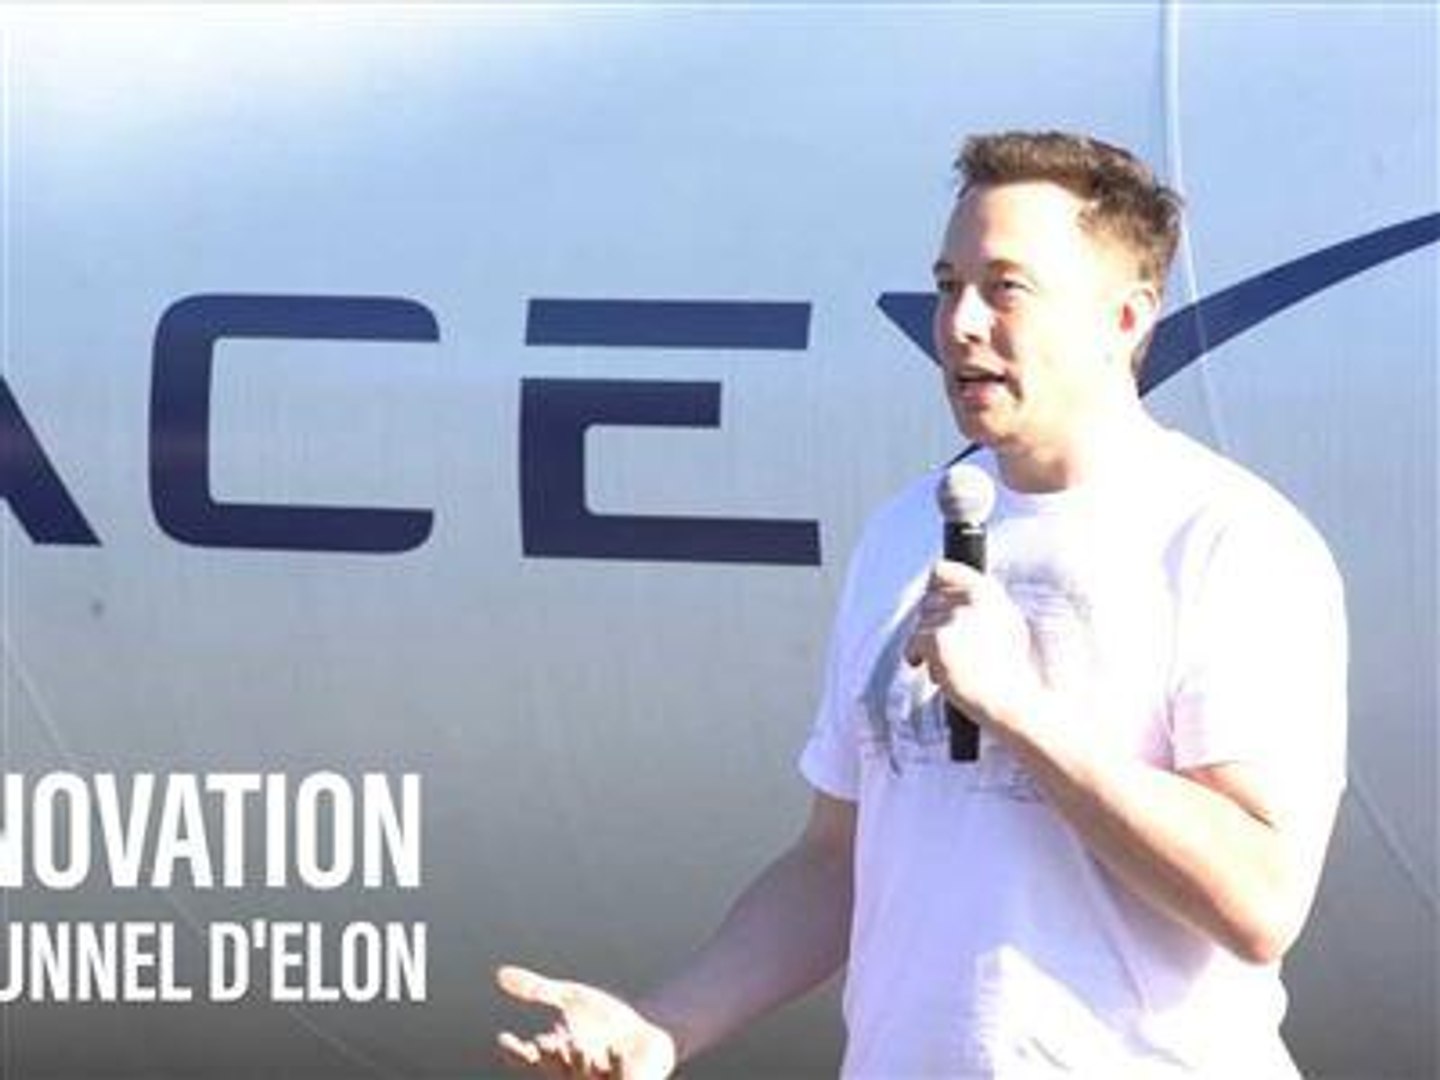 Le tunnel du futur d'Elon Musk